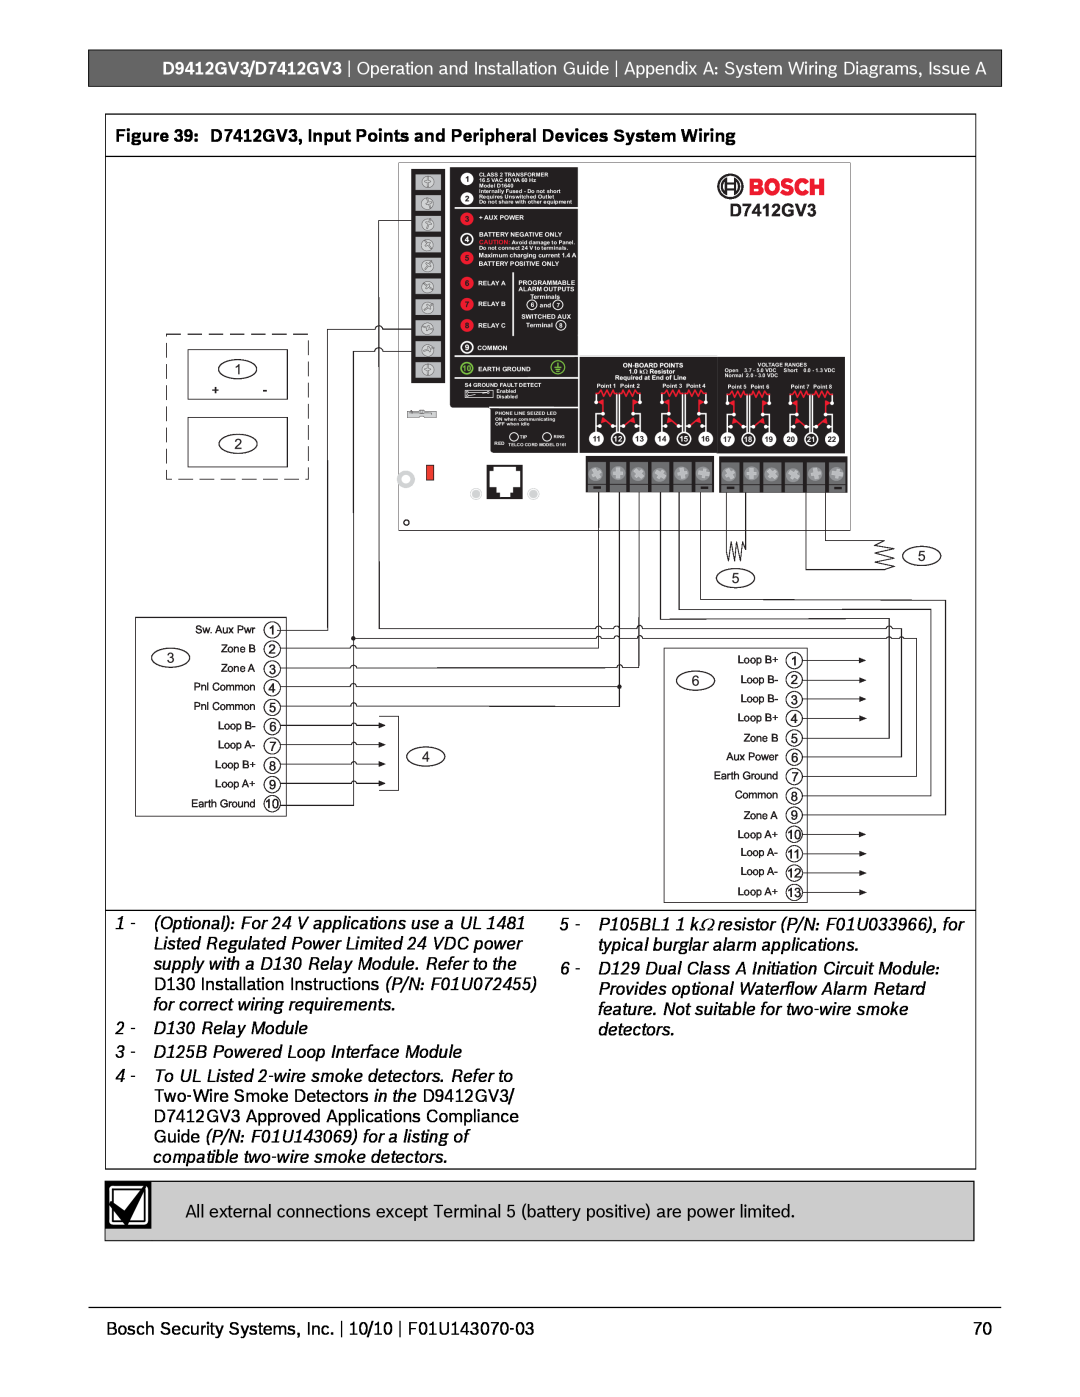 Bosch Appliances D9412GV3 manual D7412GV3 